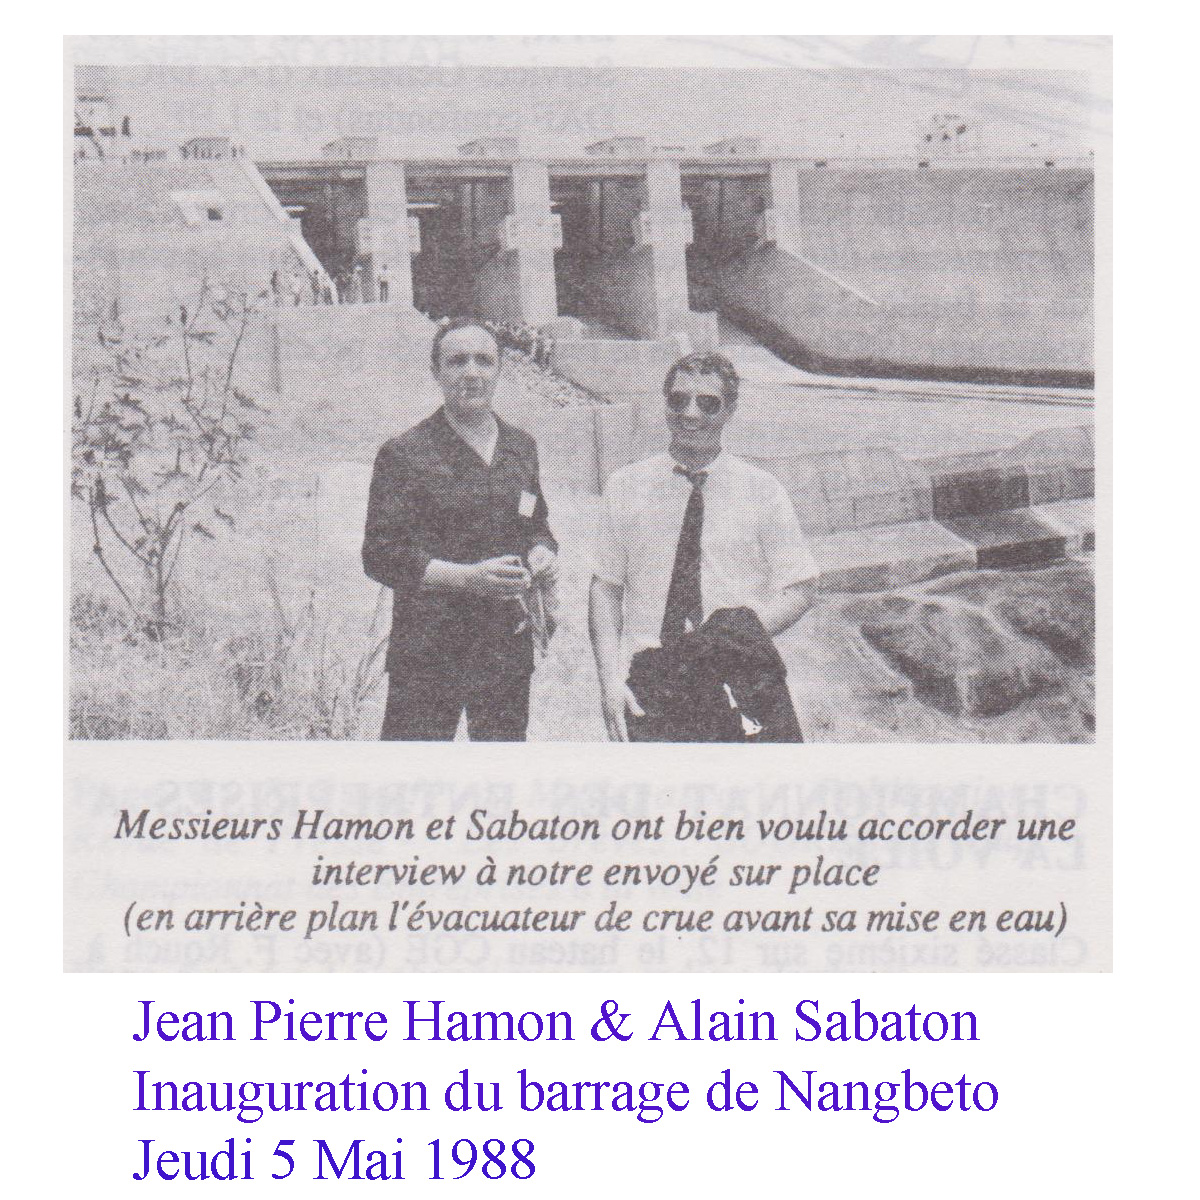 Hamon sabaton inauguration nangbeto 5 mai 1988 a